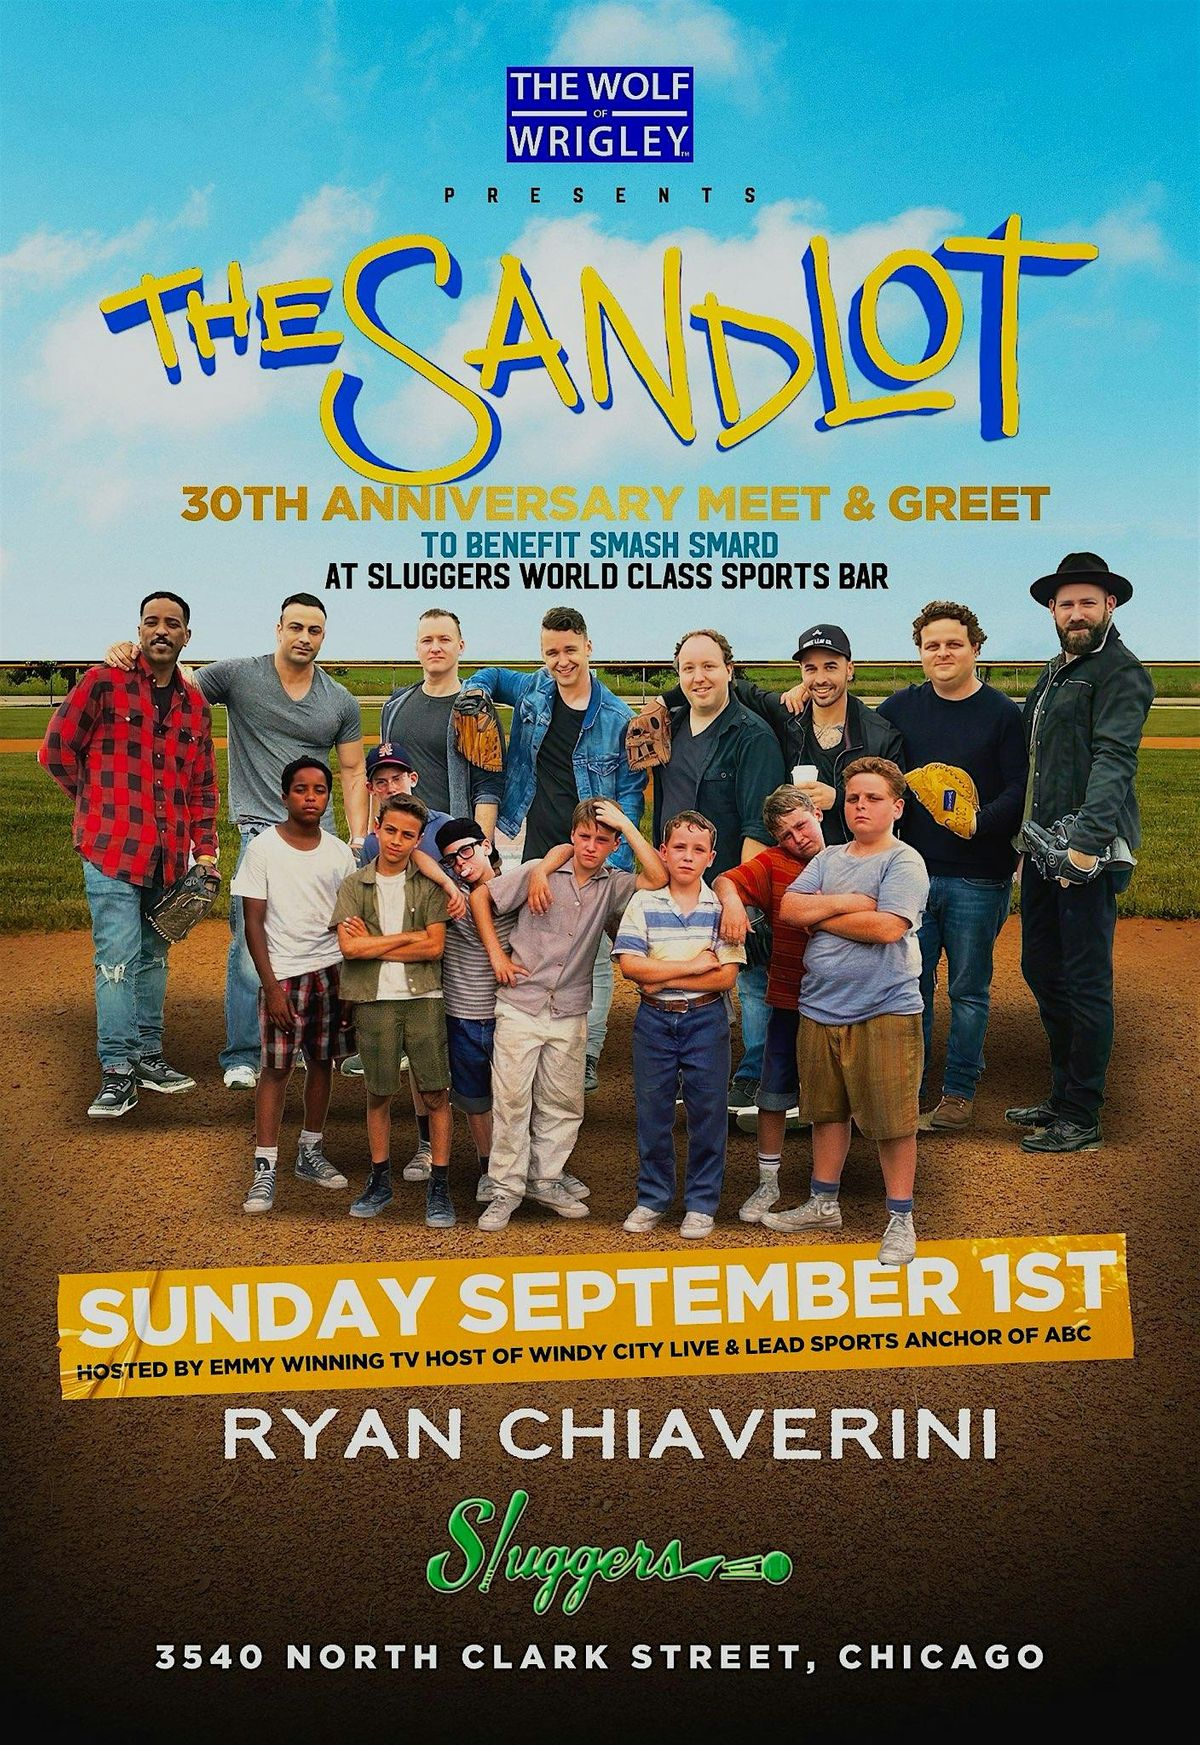 The Sandlot 30th Anniversary Meet & Greet to benefit Smash SMARD